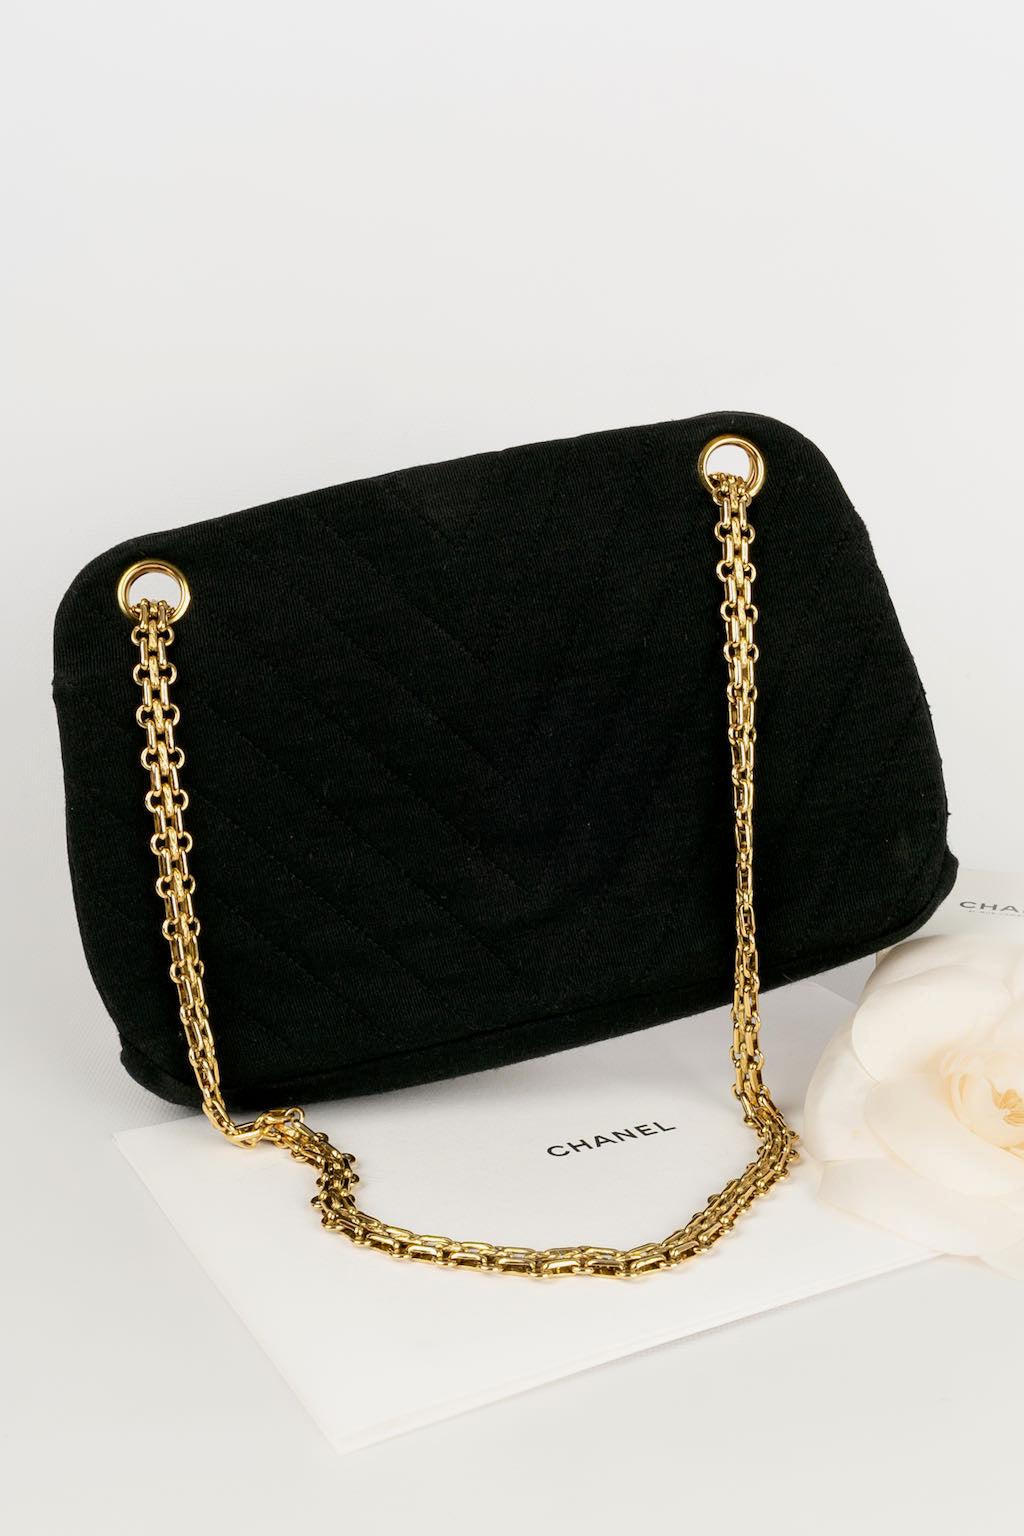 Chanel Black Overstitched Jersey Bag For Sale 7